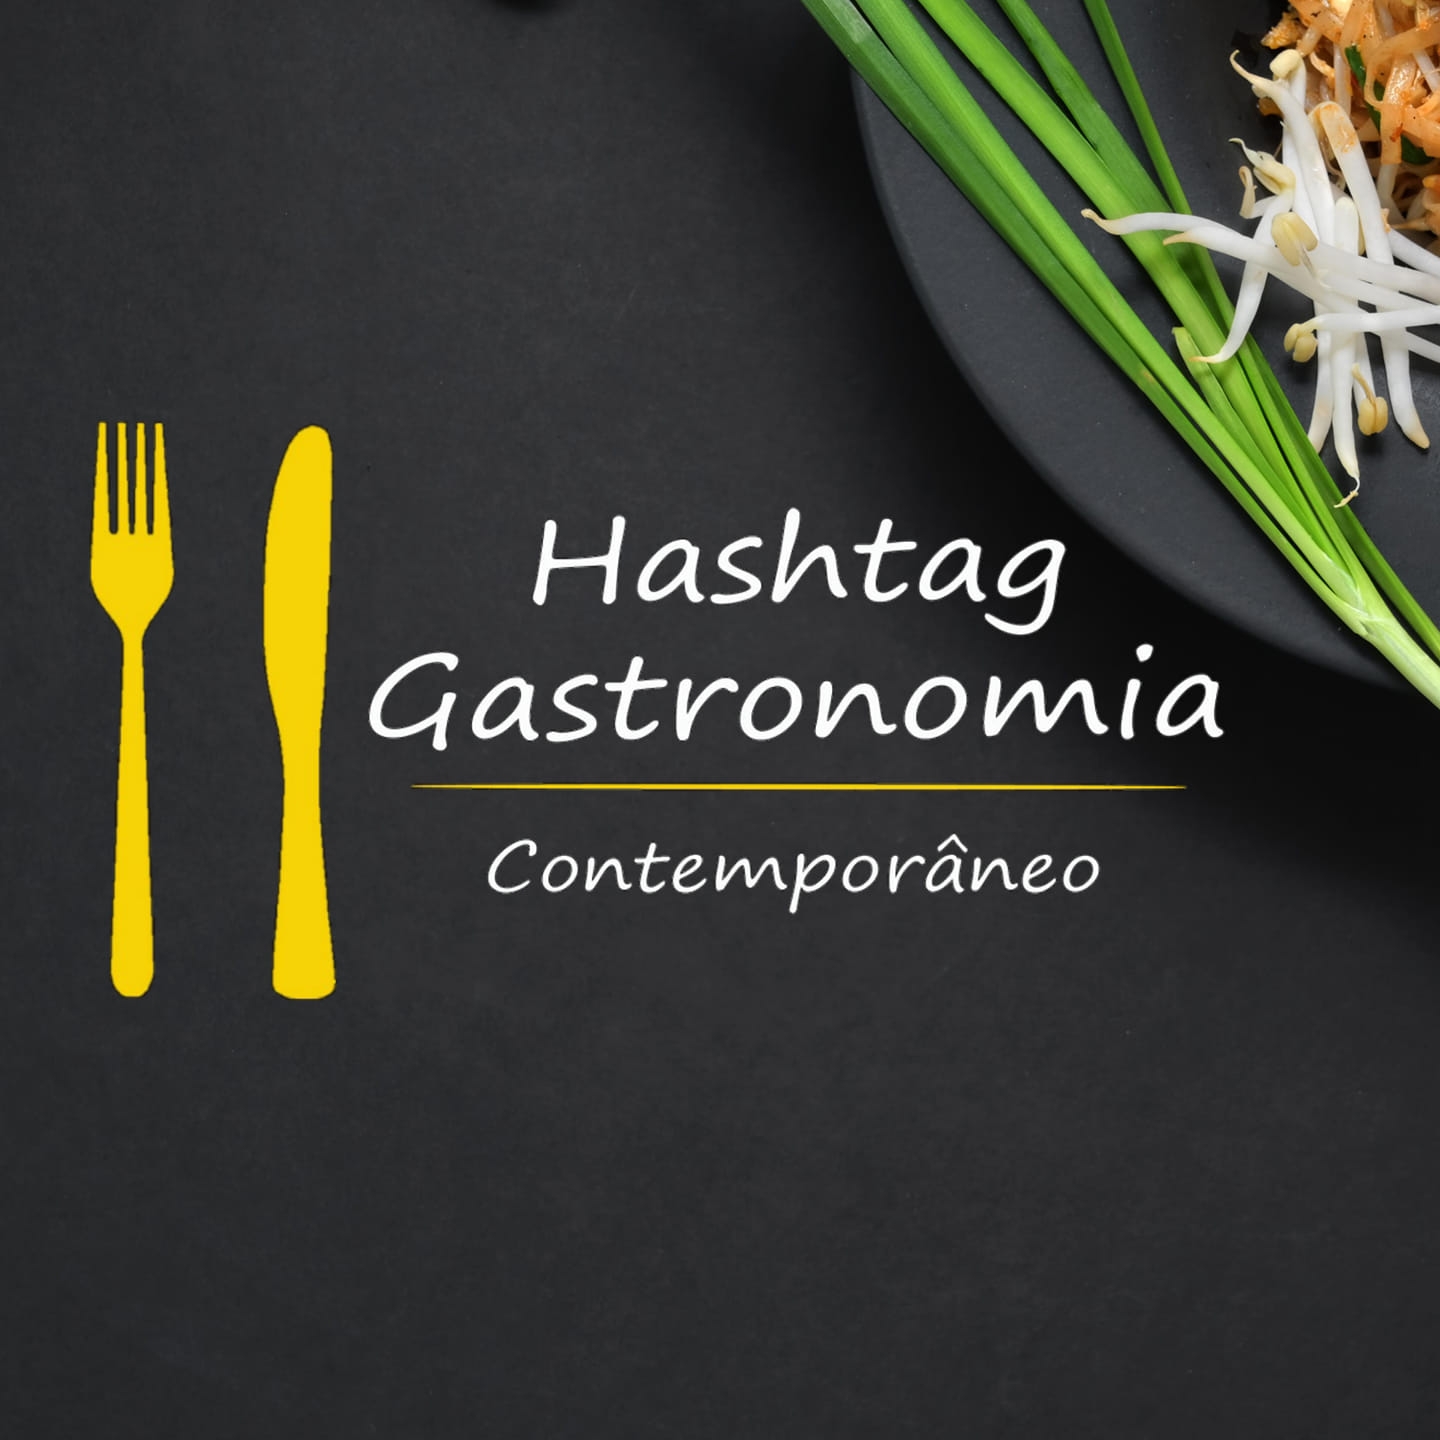 Hashtag Gastronomia Guia BaresSP